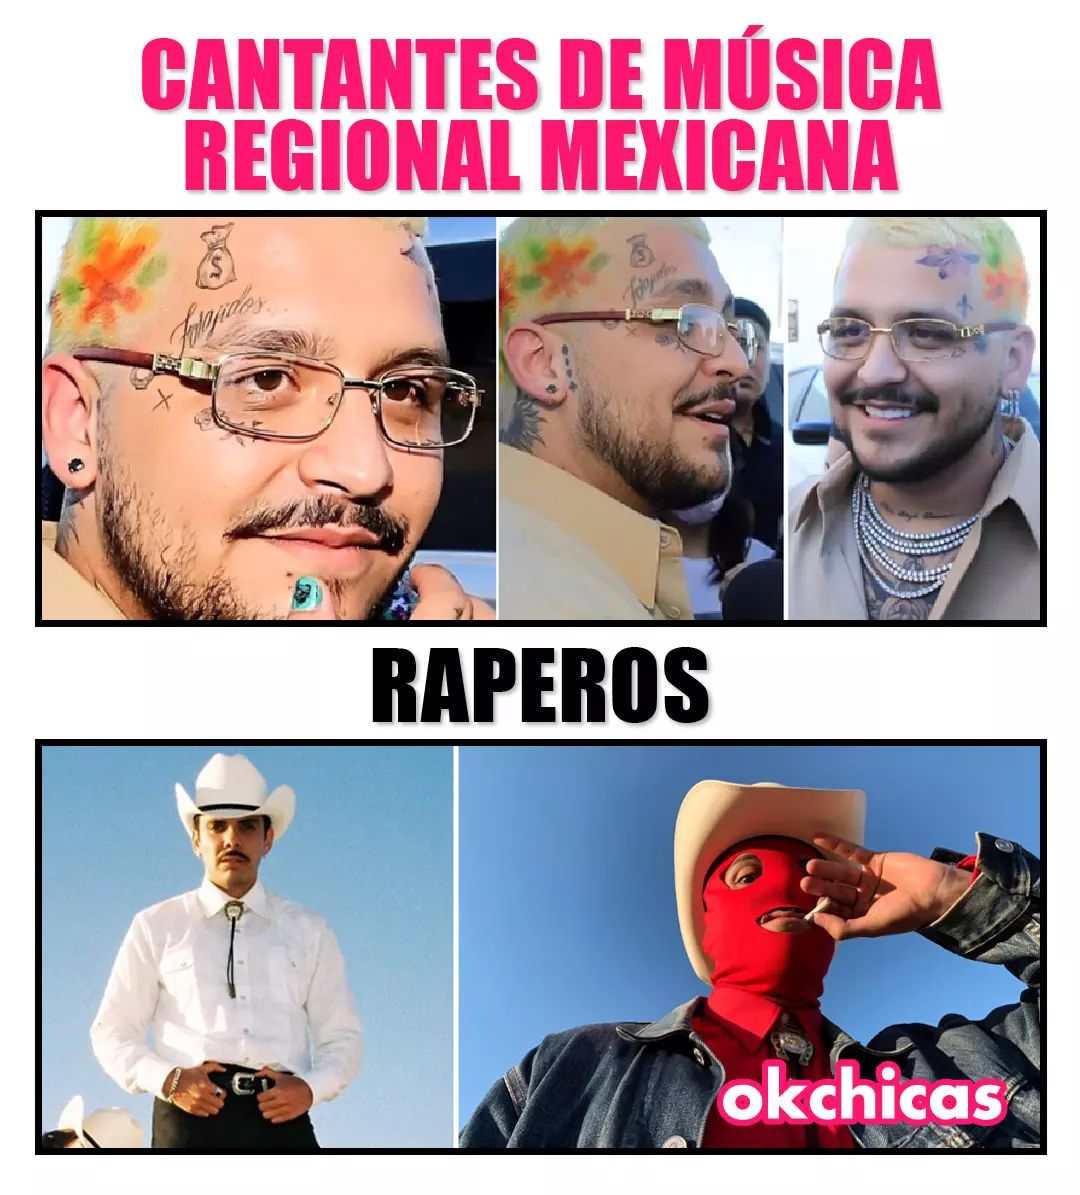 Cantantes de música regional mexicana. Raperos.